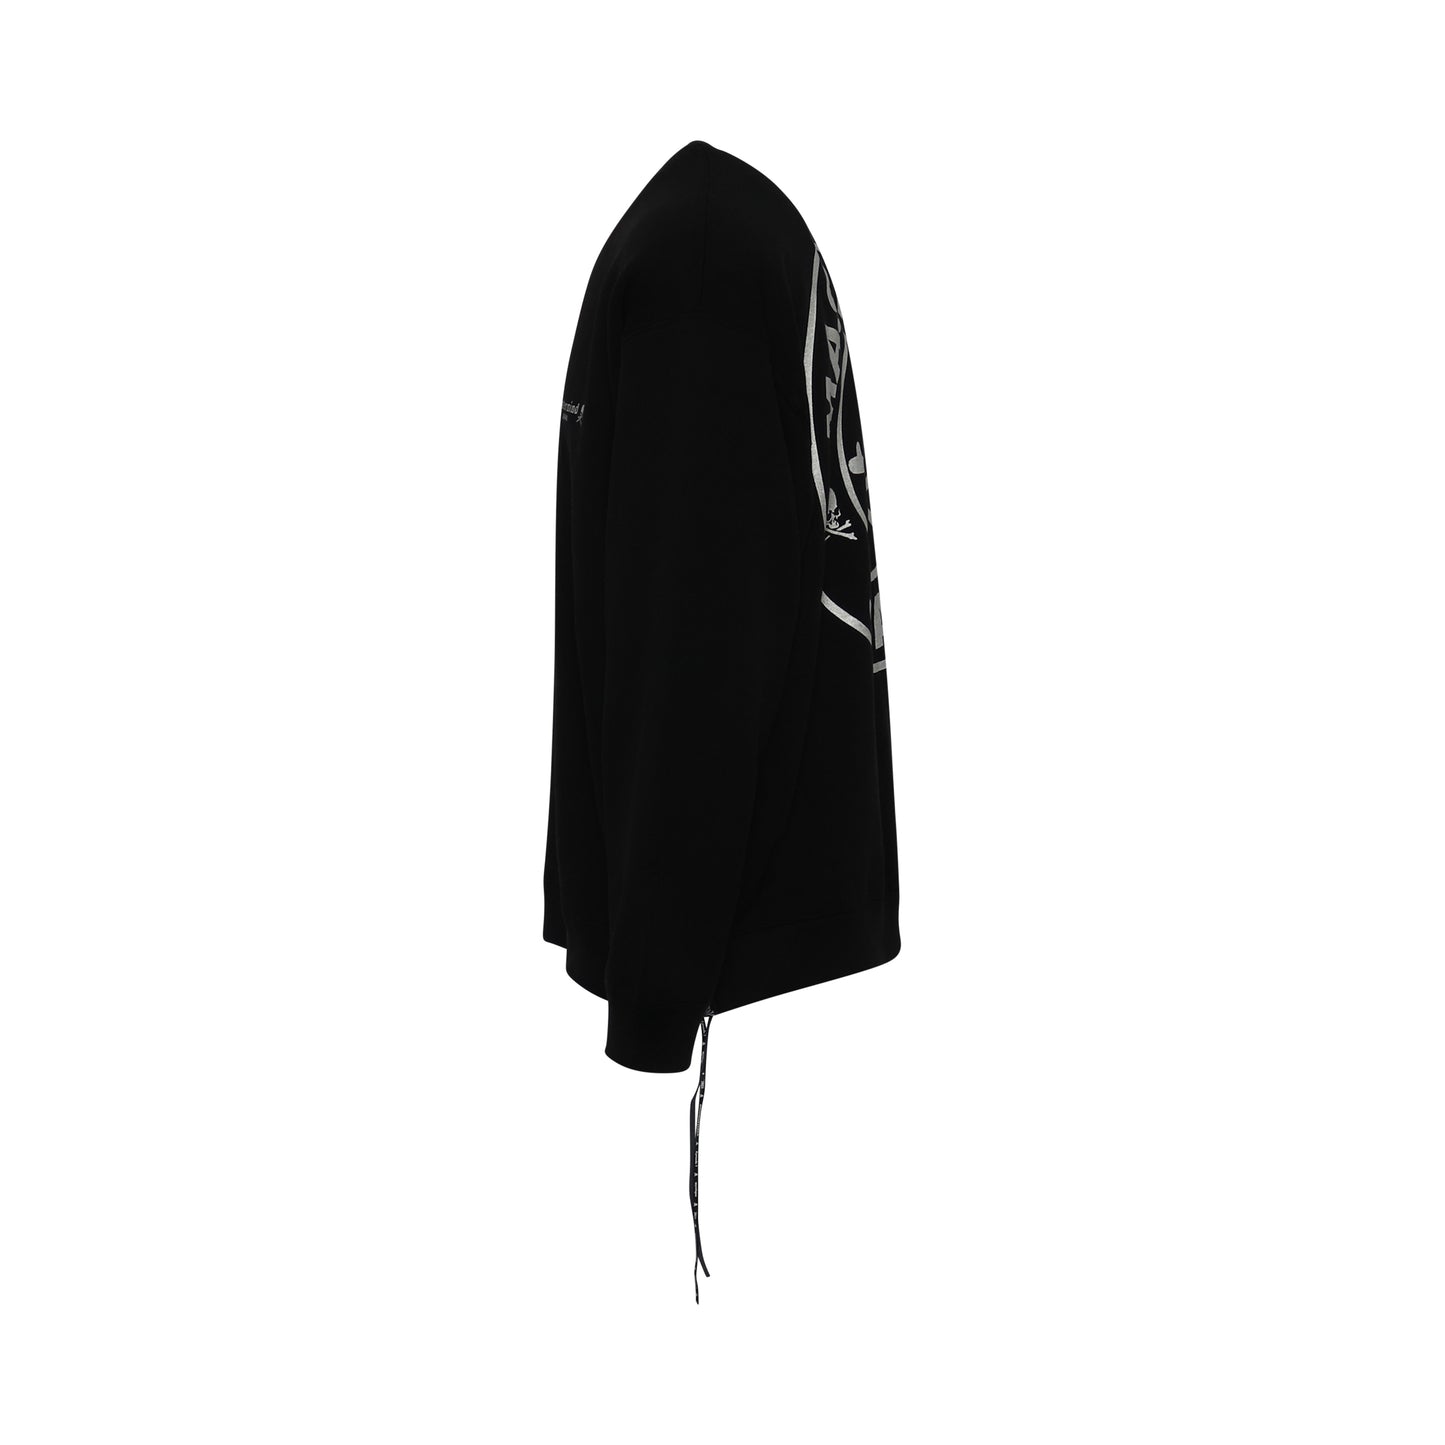 High Reflective Logo Boxy Fit Sweatshirt in Black